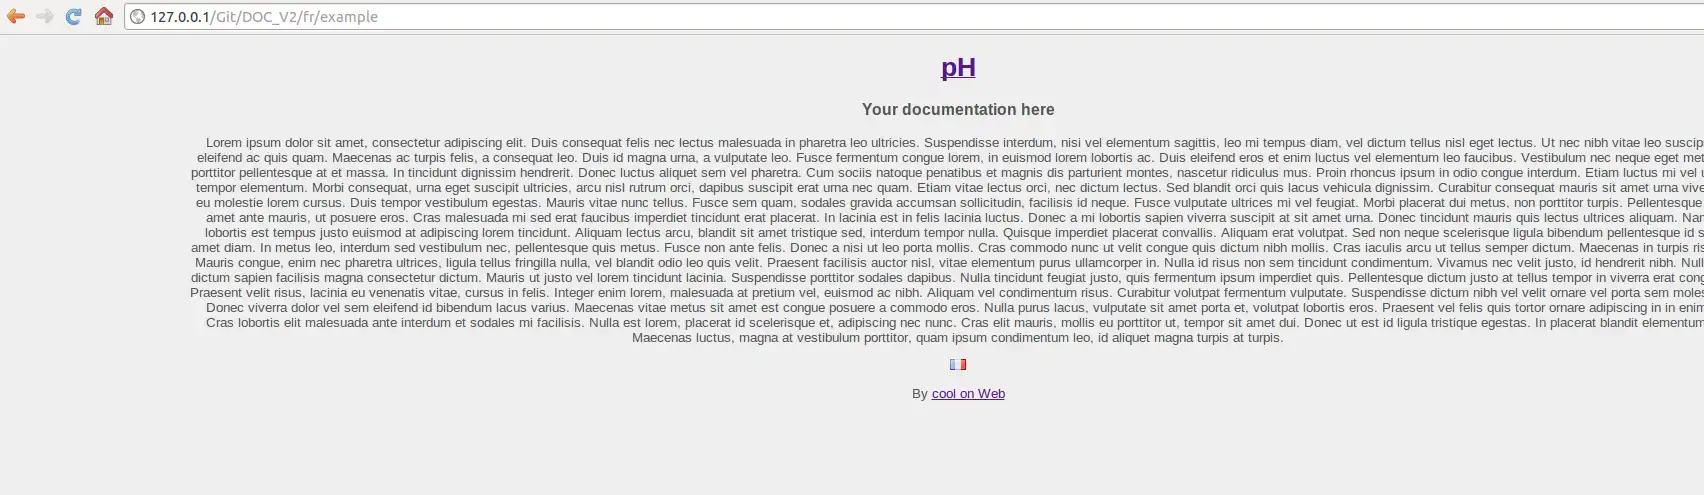 Download web tool or web app pH7 Nav Doc Script